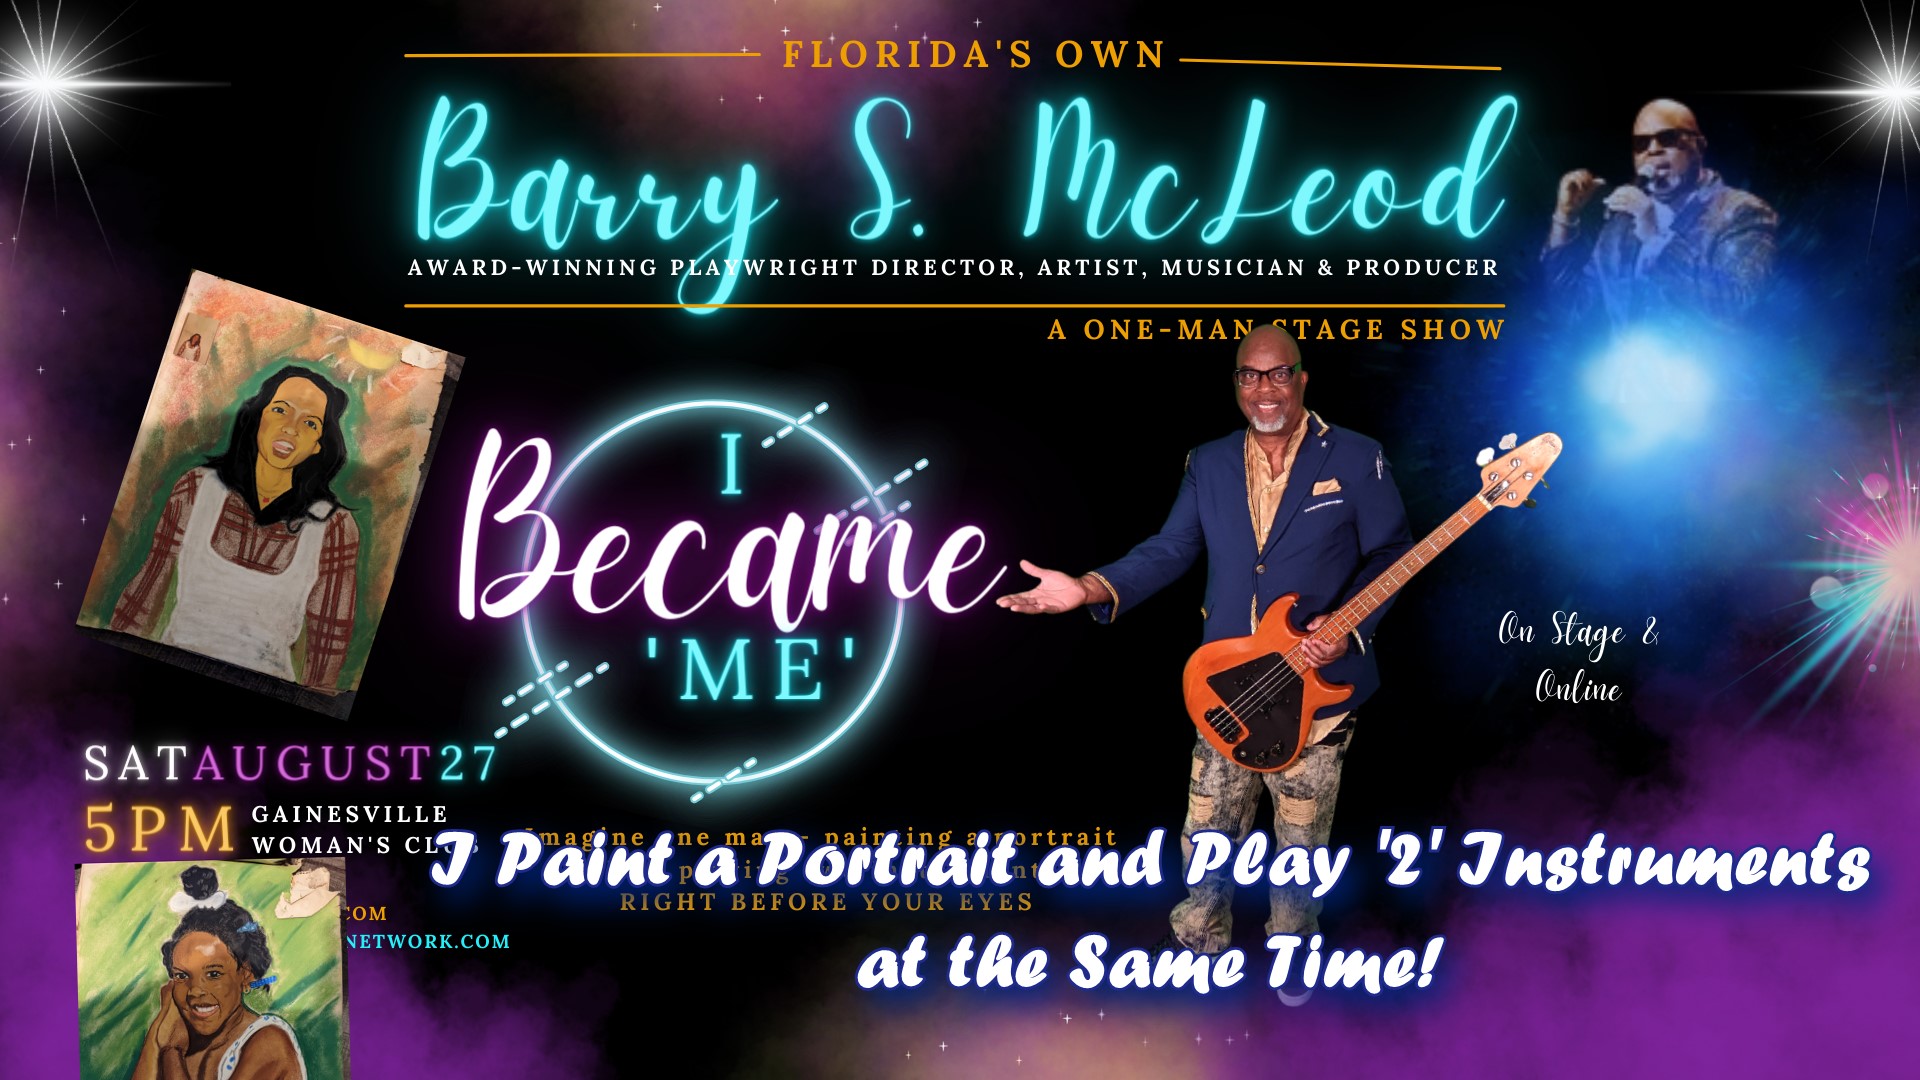 “I Became Me”: Award-Winning Barry S. McLeod Presents